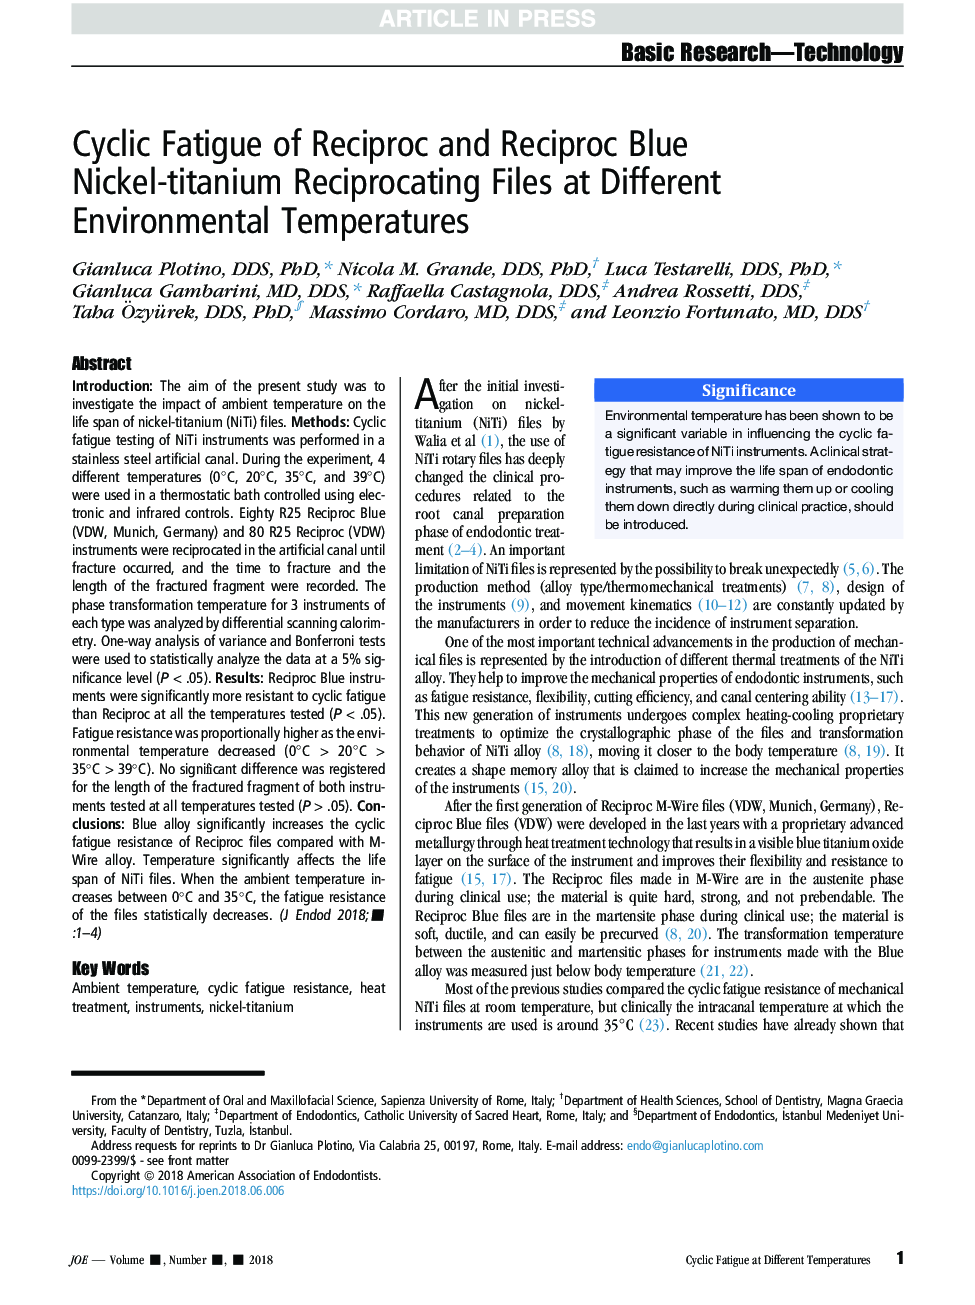 Cyclic Fatigue of Reciproc and Reciproc Blue Nickel-titanium Reciprocating Files at Different Environmental Temperatures